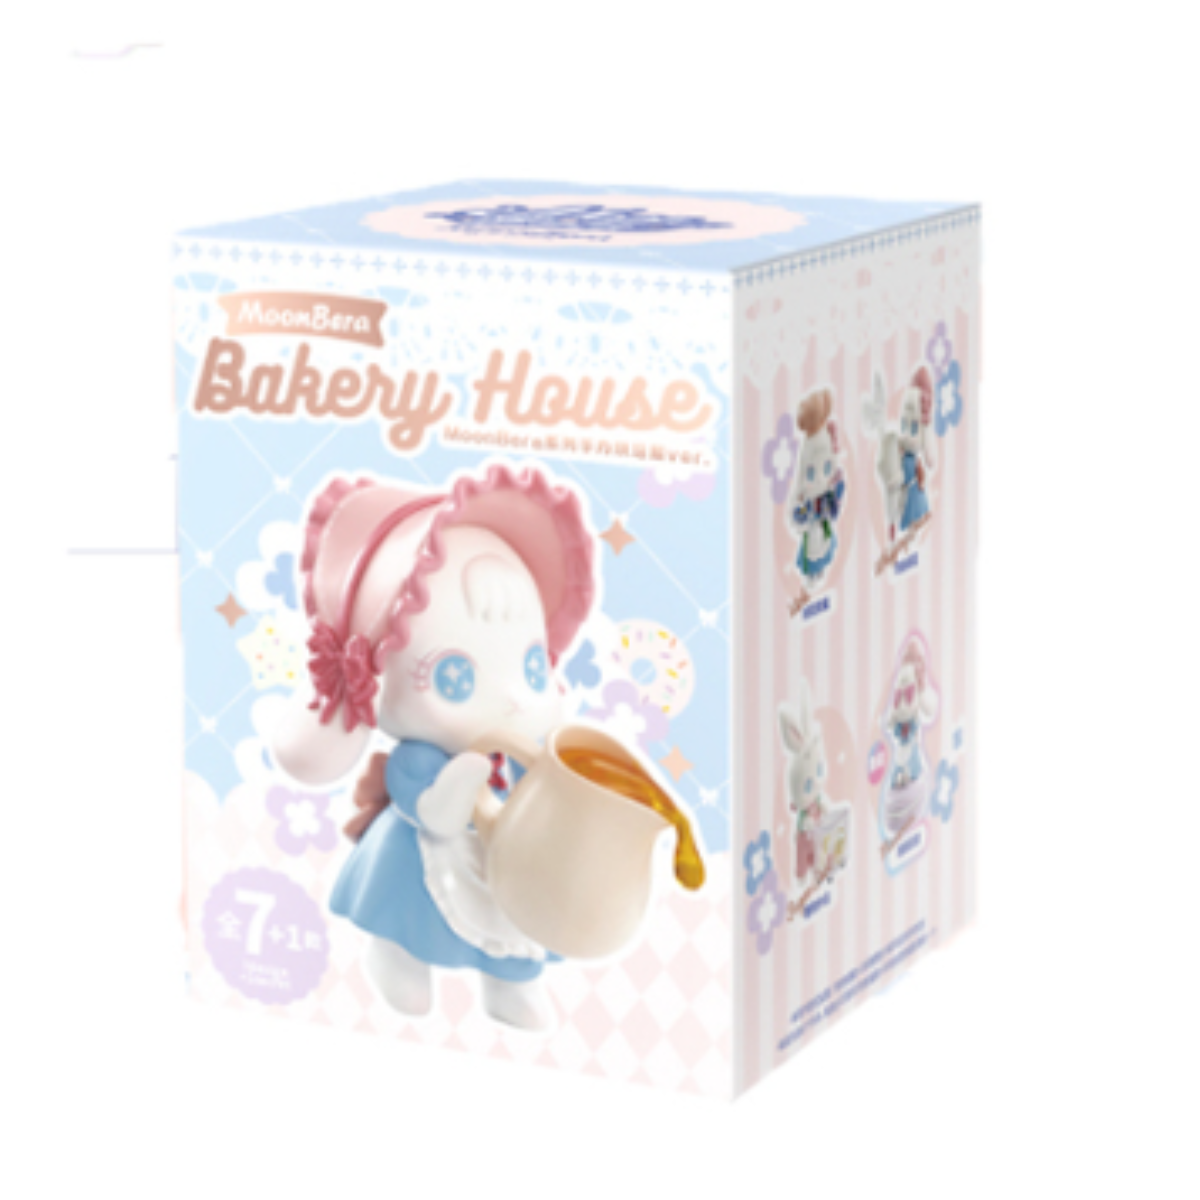 MoonBera x Bakery House Series-Single Box (Random)-MoonBera-Ace Cards &amp; Collectibles